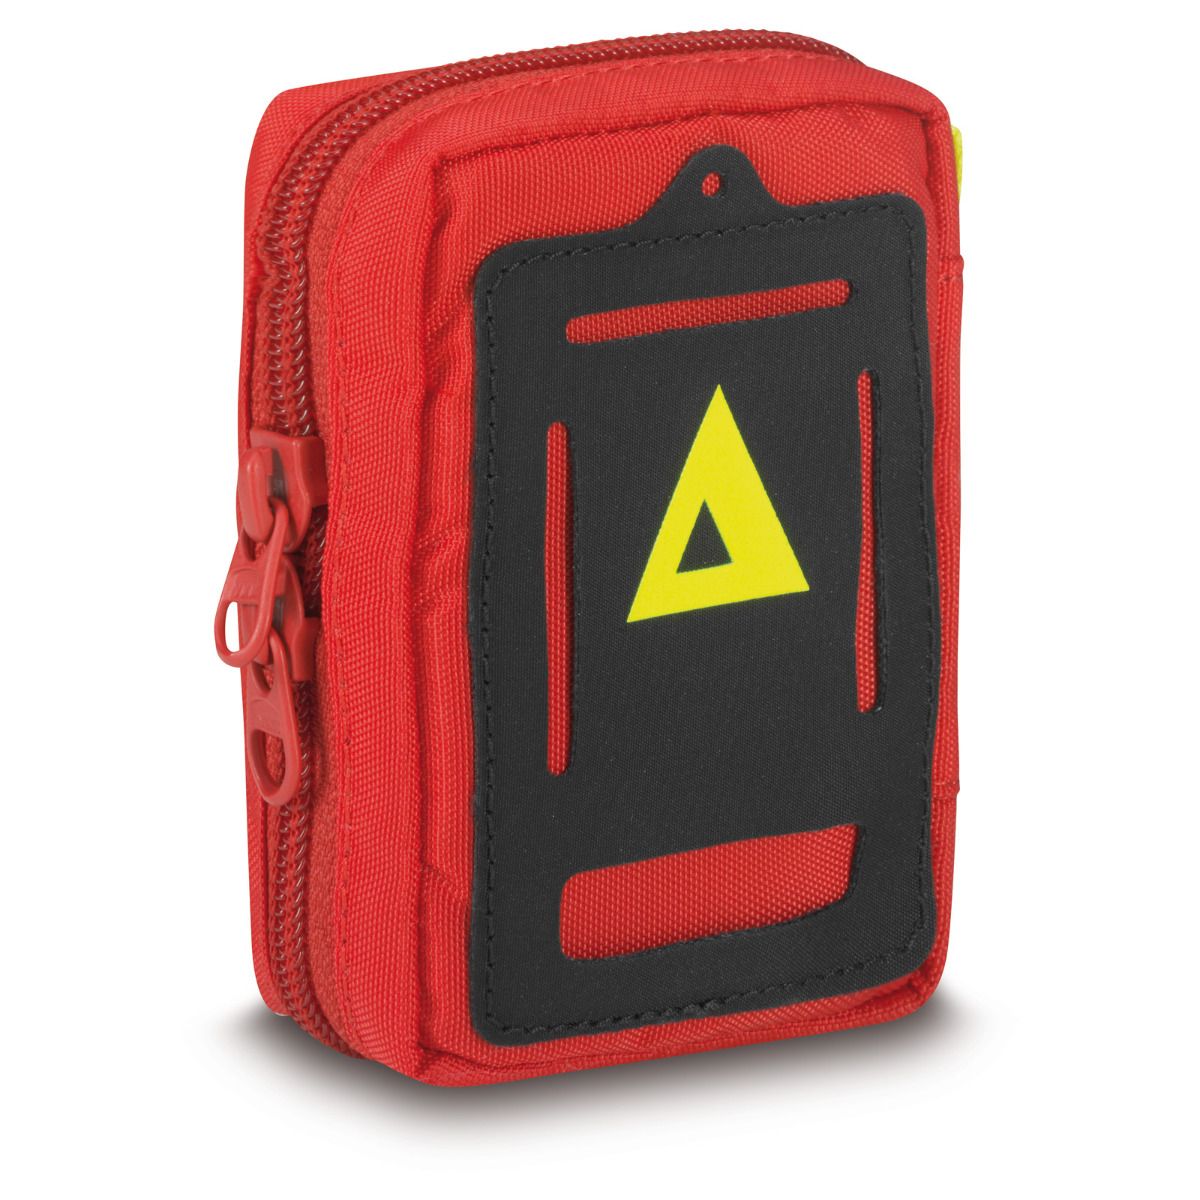 Erste-Hilfe-Tasche XS - 2019, PAX-Light in rot